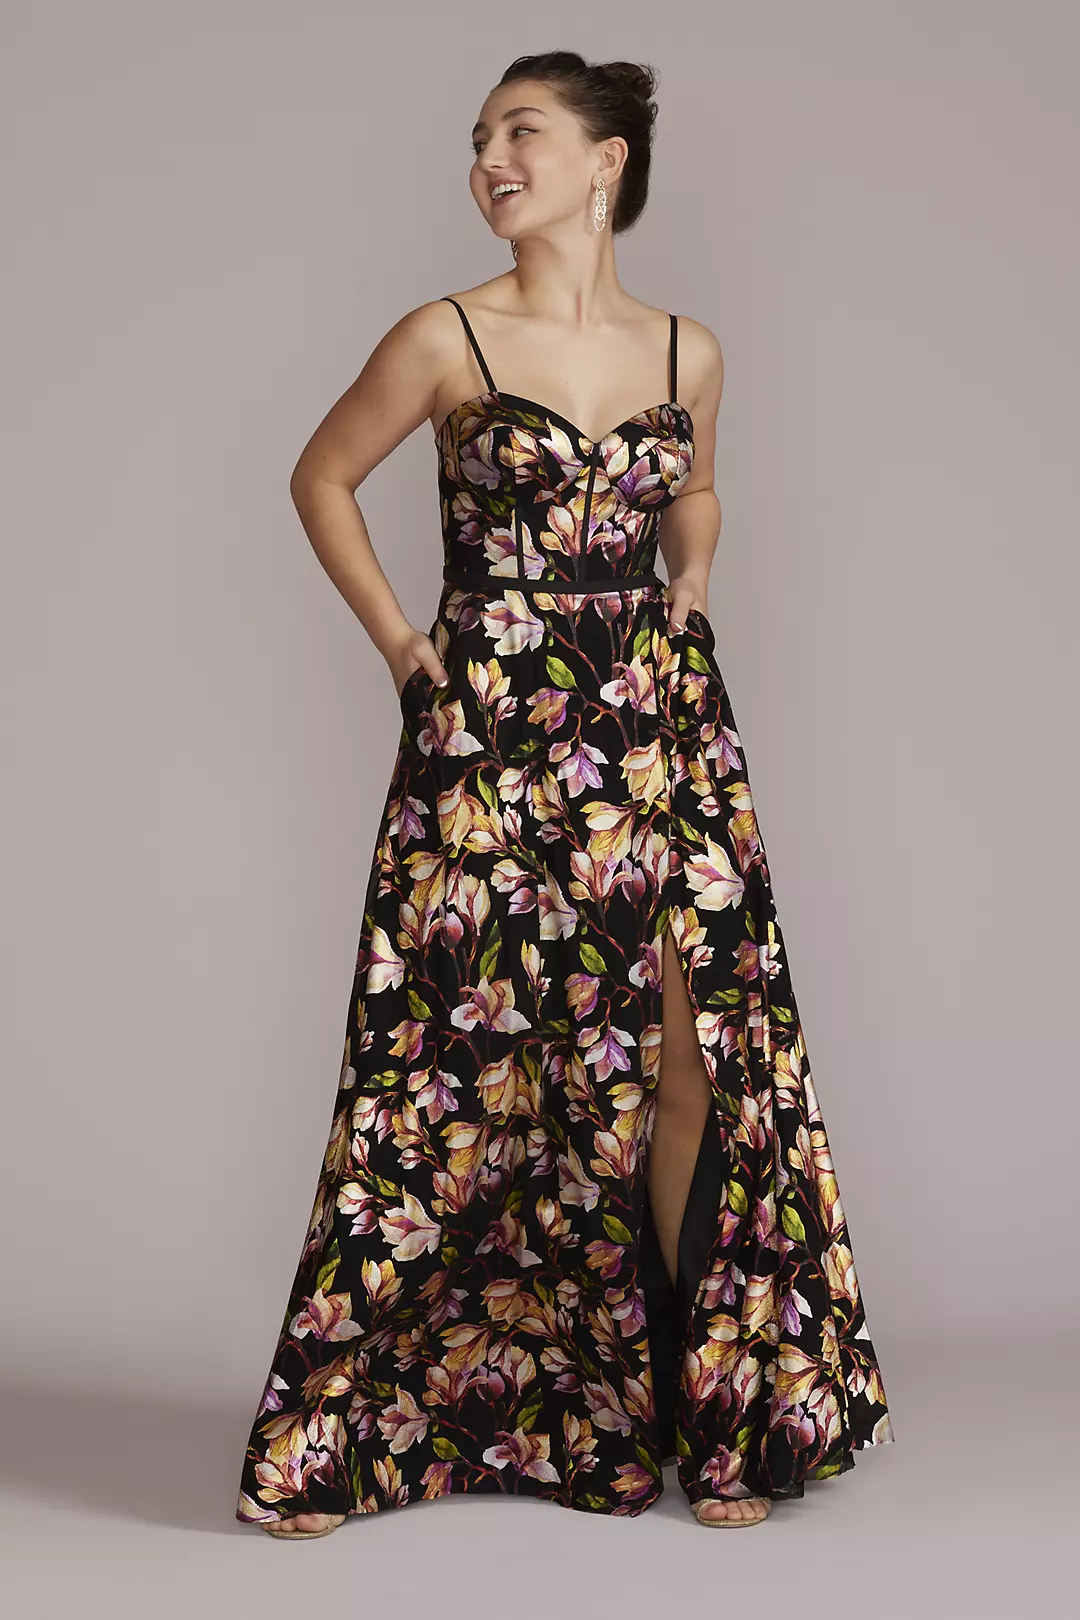 Corset Bodice Floral Patterned A-Line Dress Image